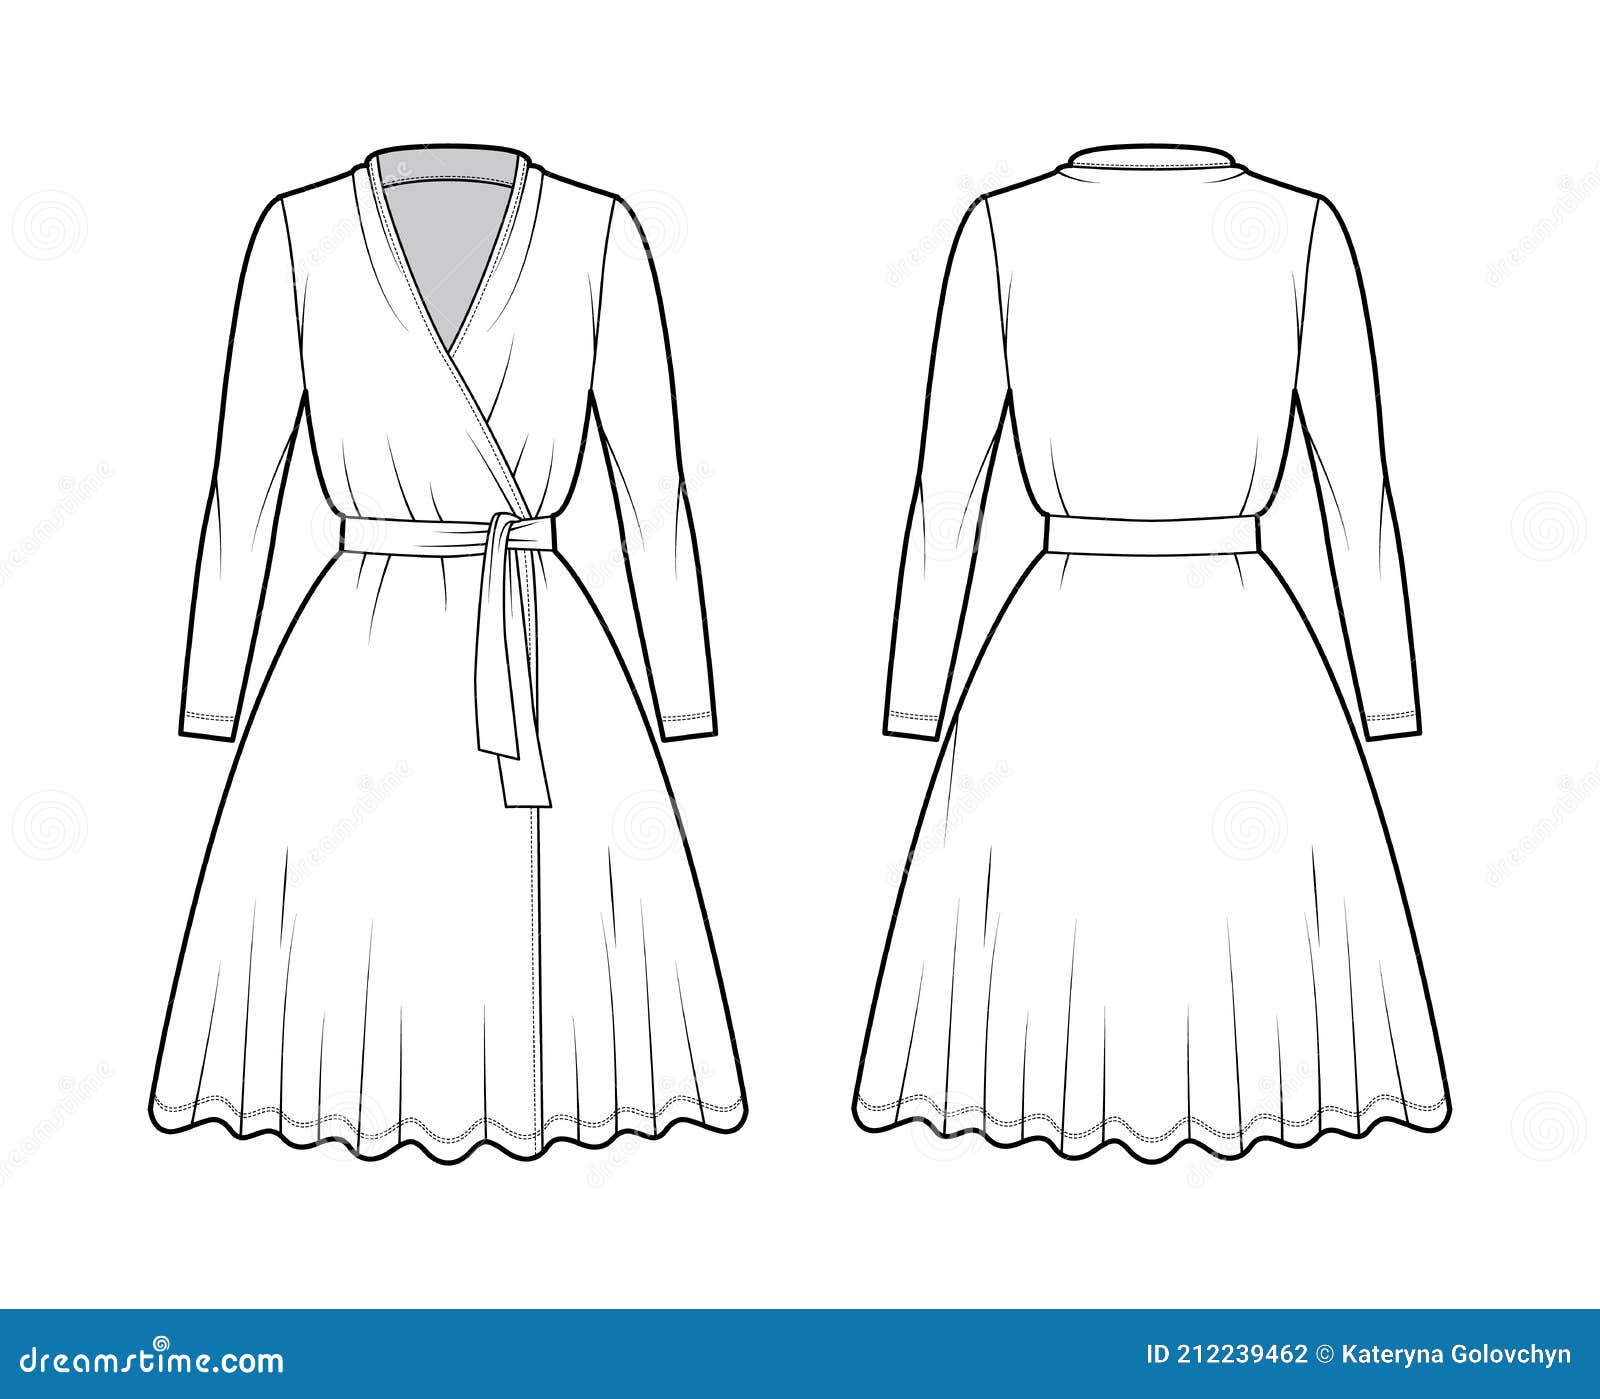 Wrap Dress Technical Fashion Illustration with Deep V-neck, Long ...